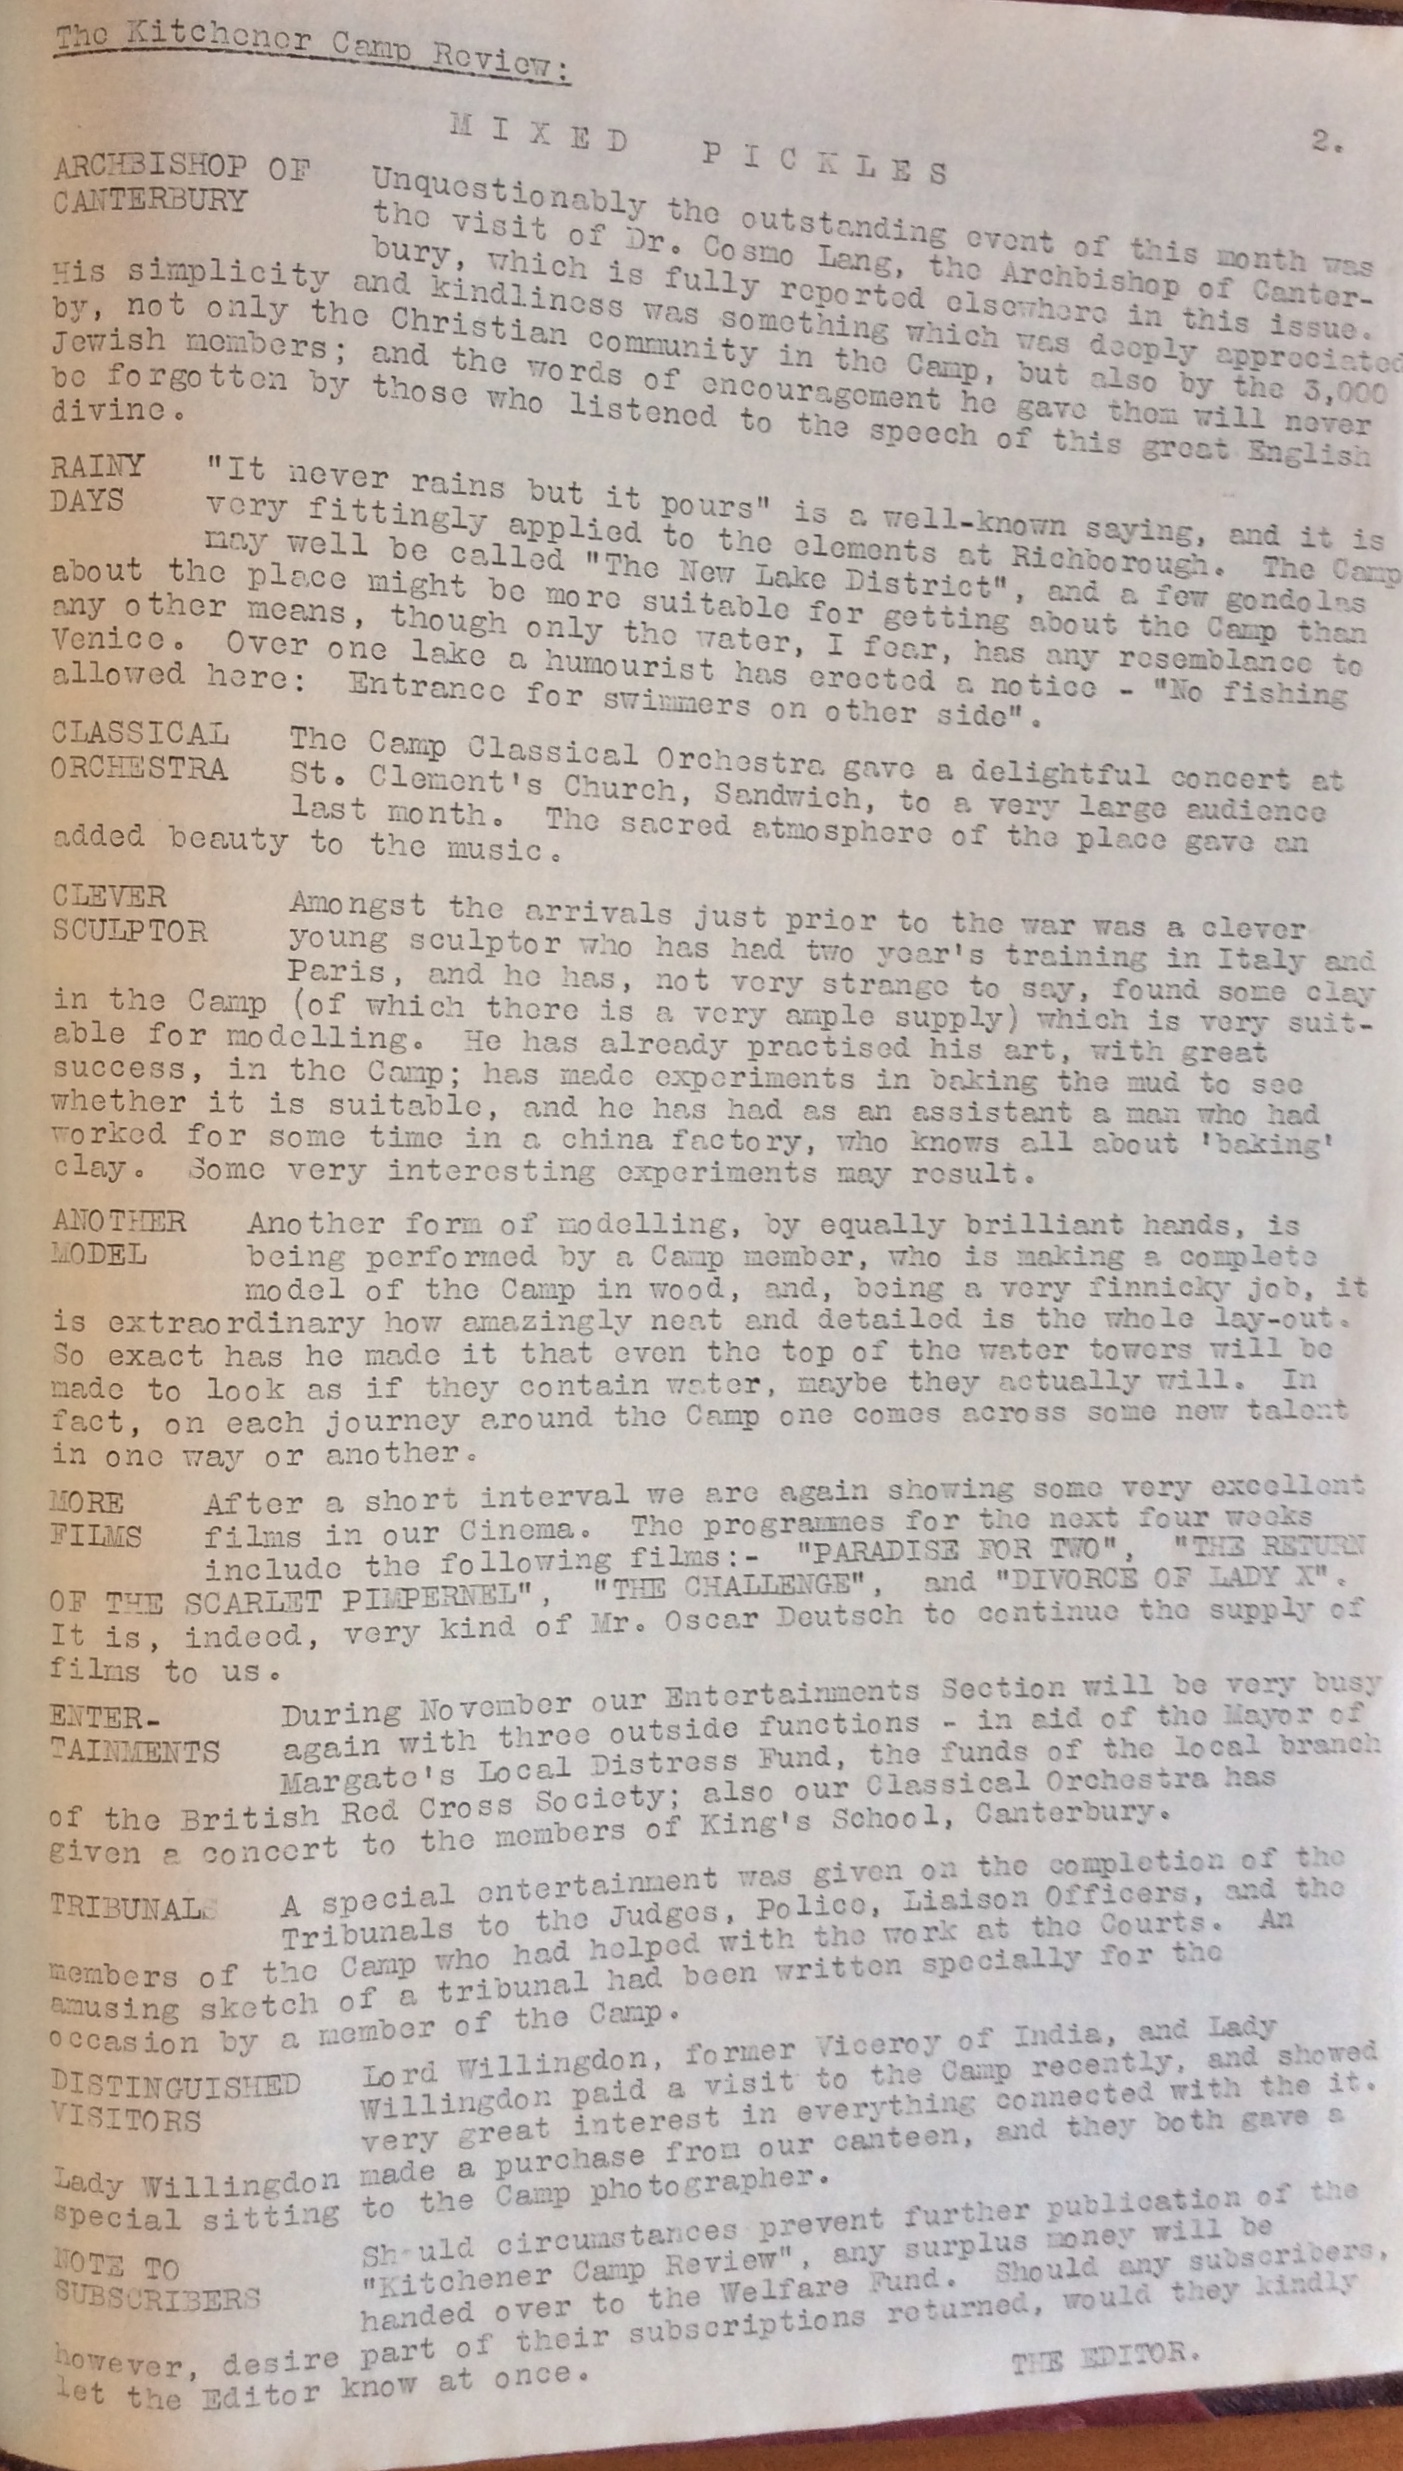 Kitchener Camp Review, November 1939, page 2